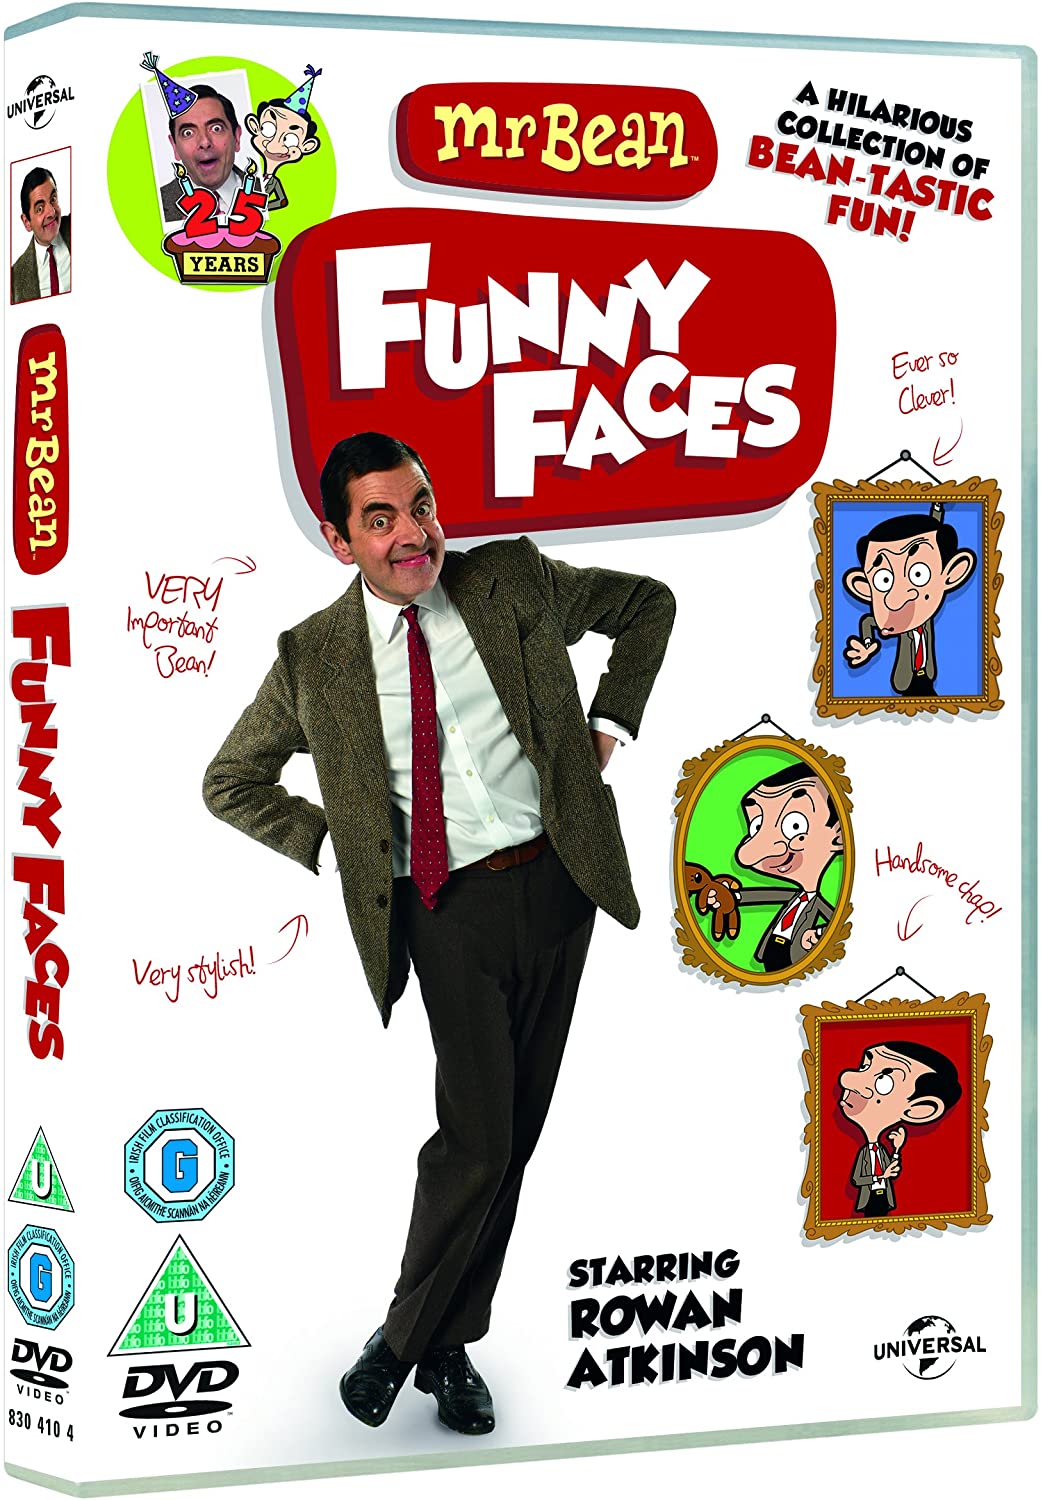 Mr Bean - Funny Faces [2015] - Comedy [Audio CD]